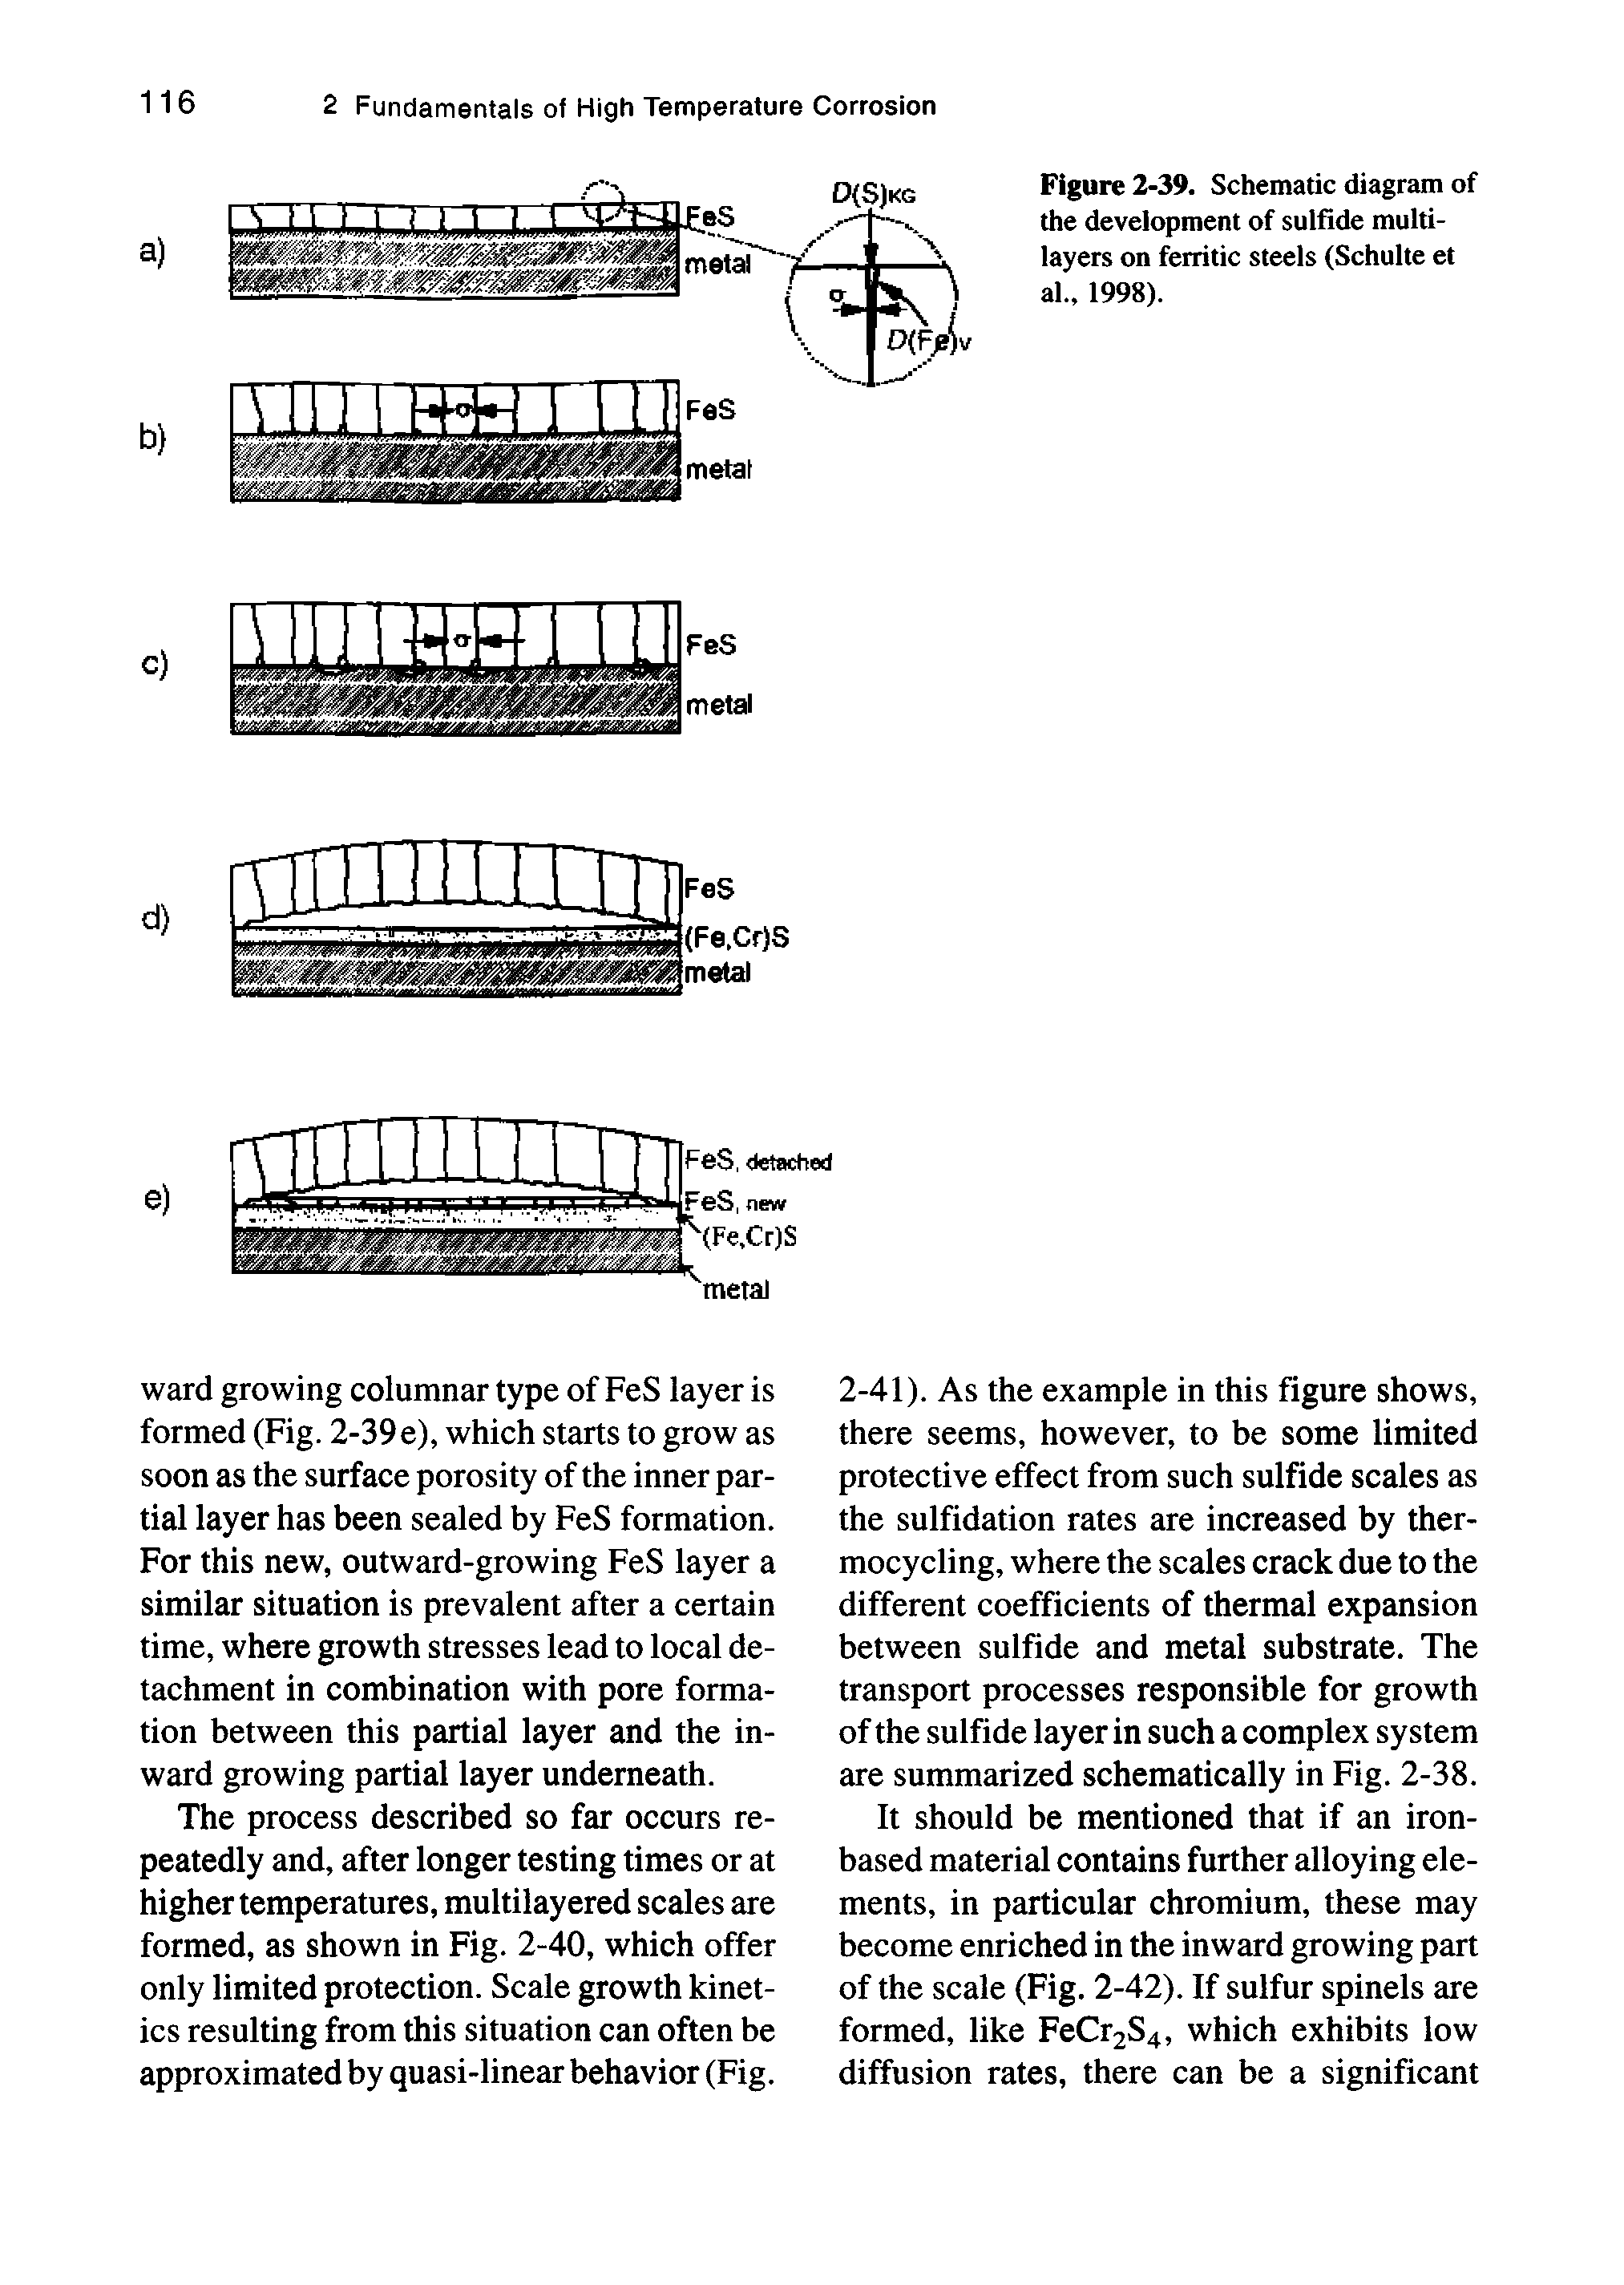 Figure 2-39. Schematic diagram of the development of sulfide multilayers on ferritic steels (Schulte et al., 1998).